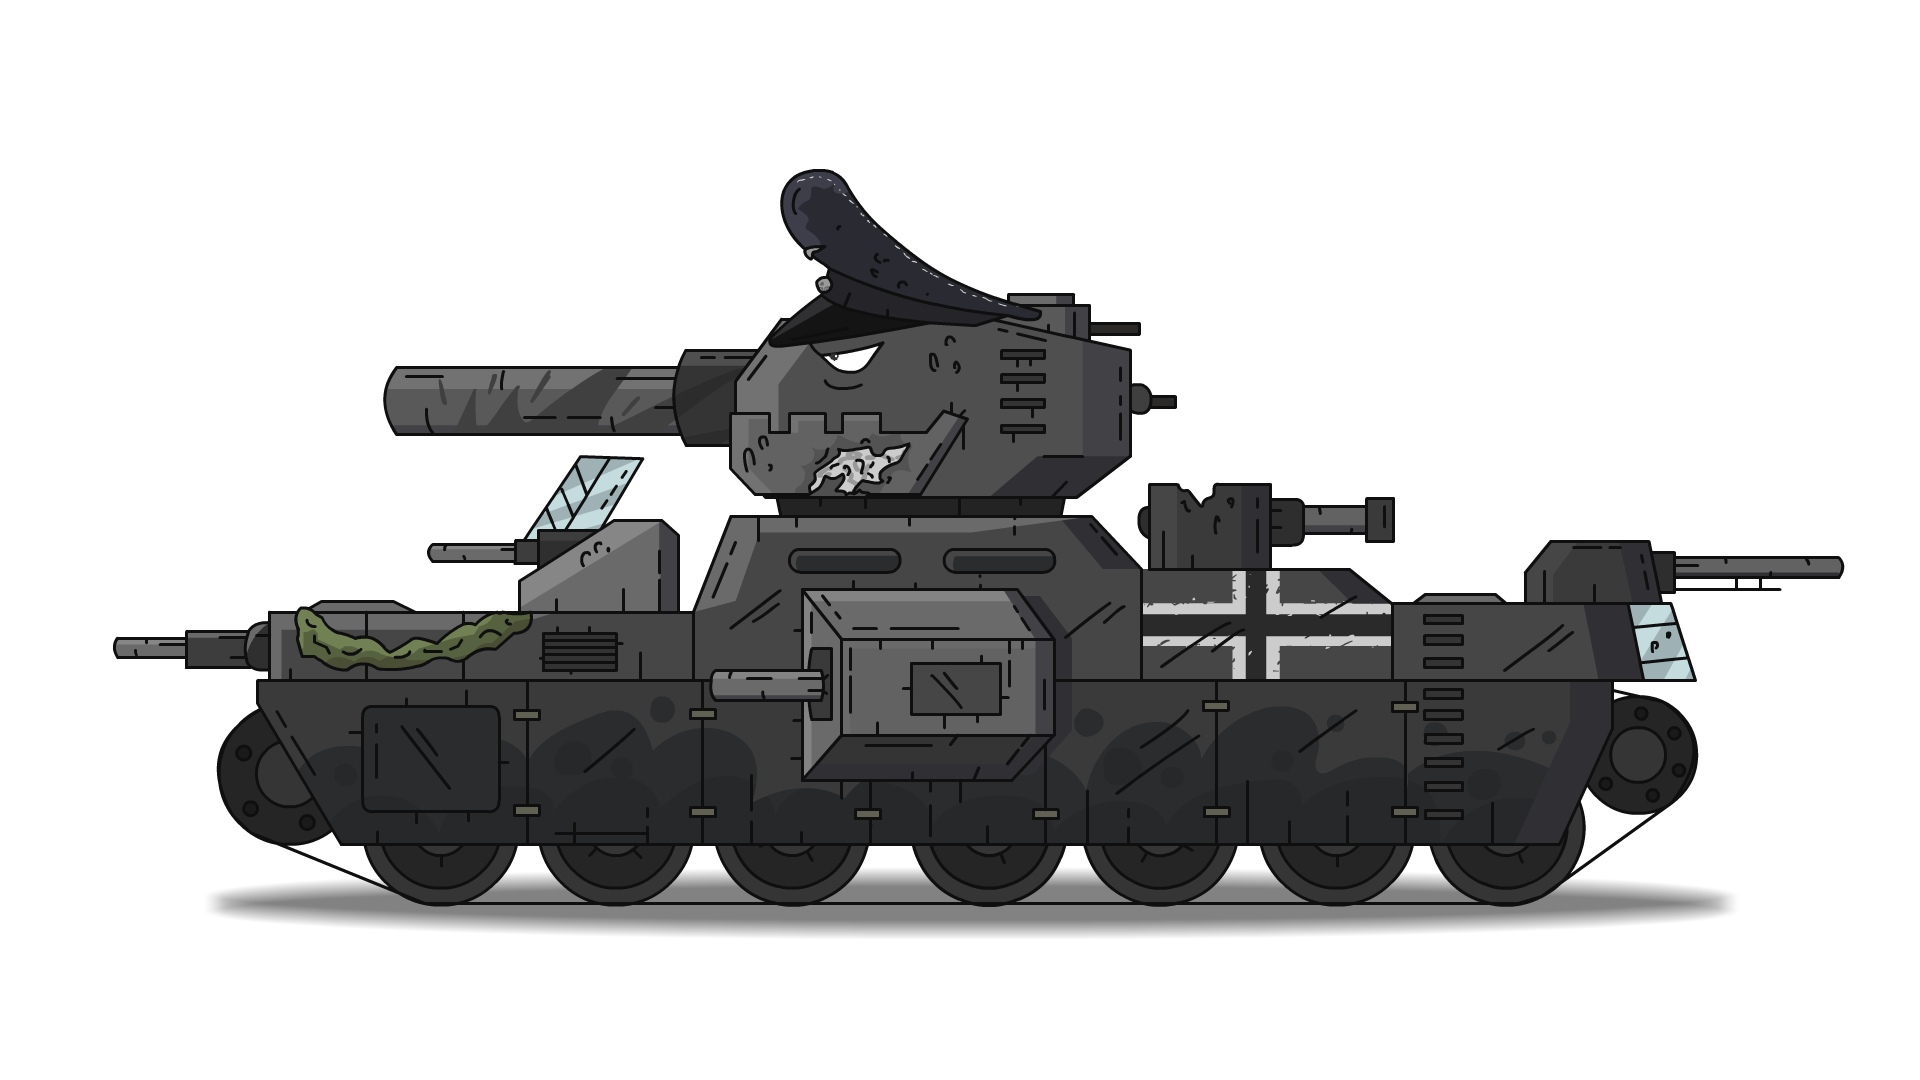 Немецкие танки геранда. РАТТЕ танк Геранд.